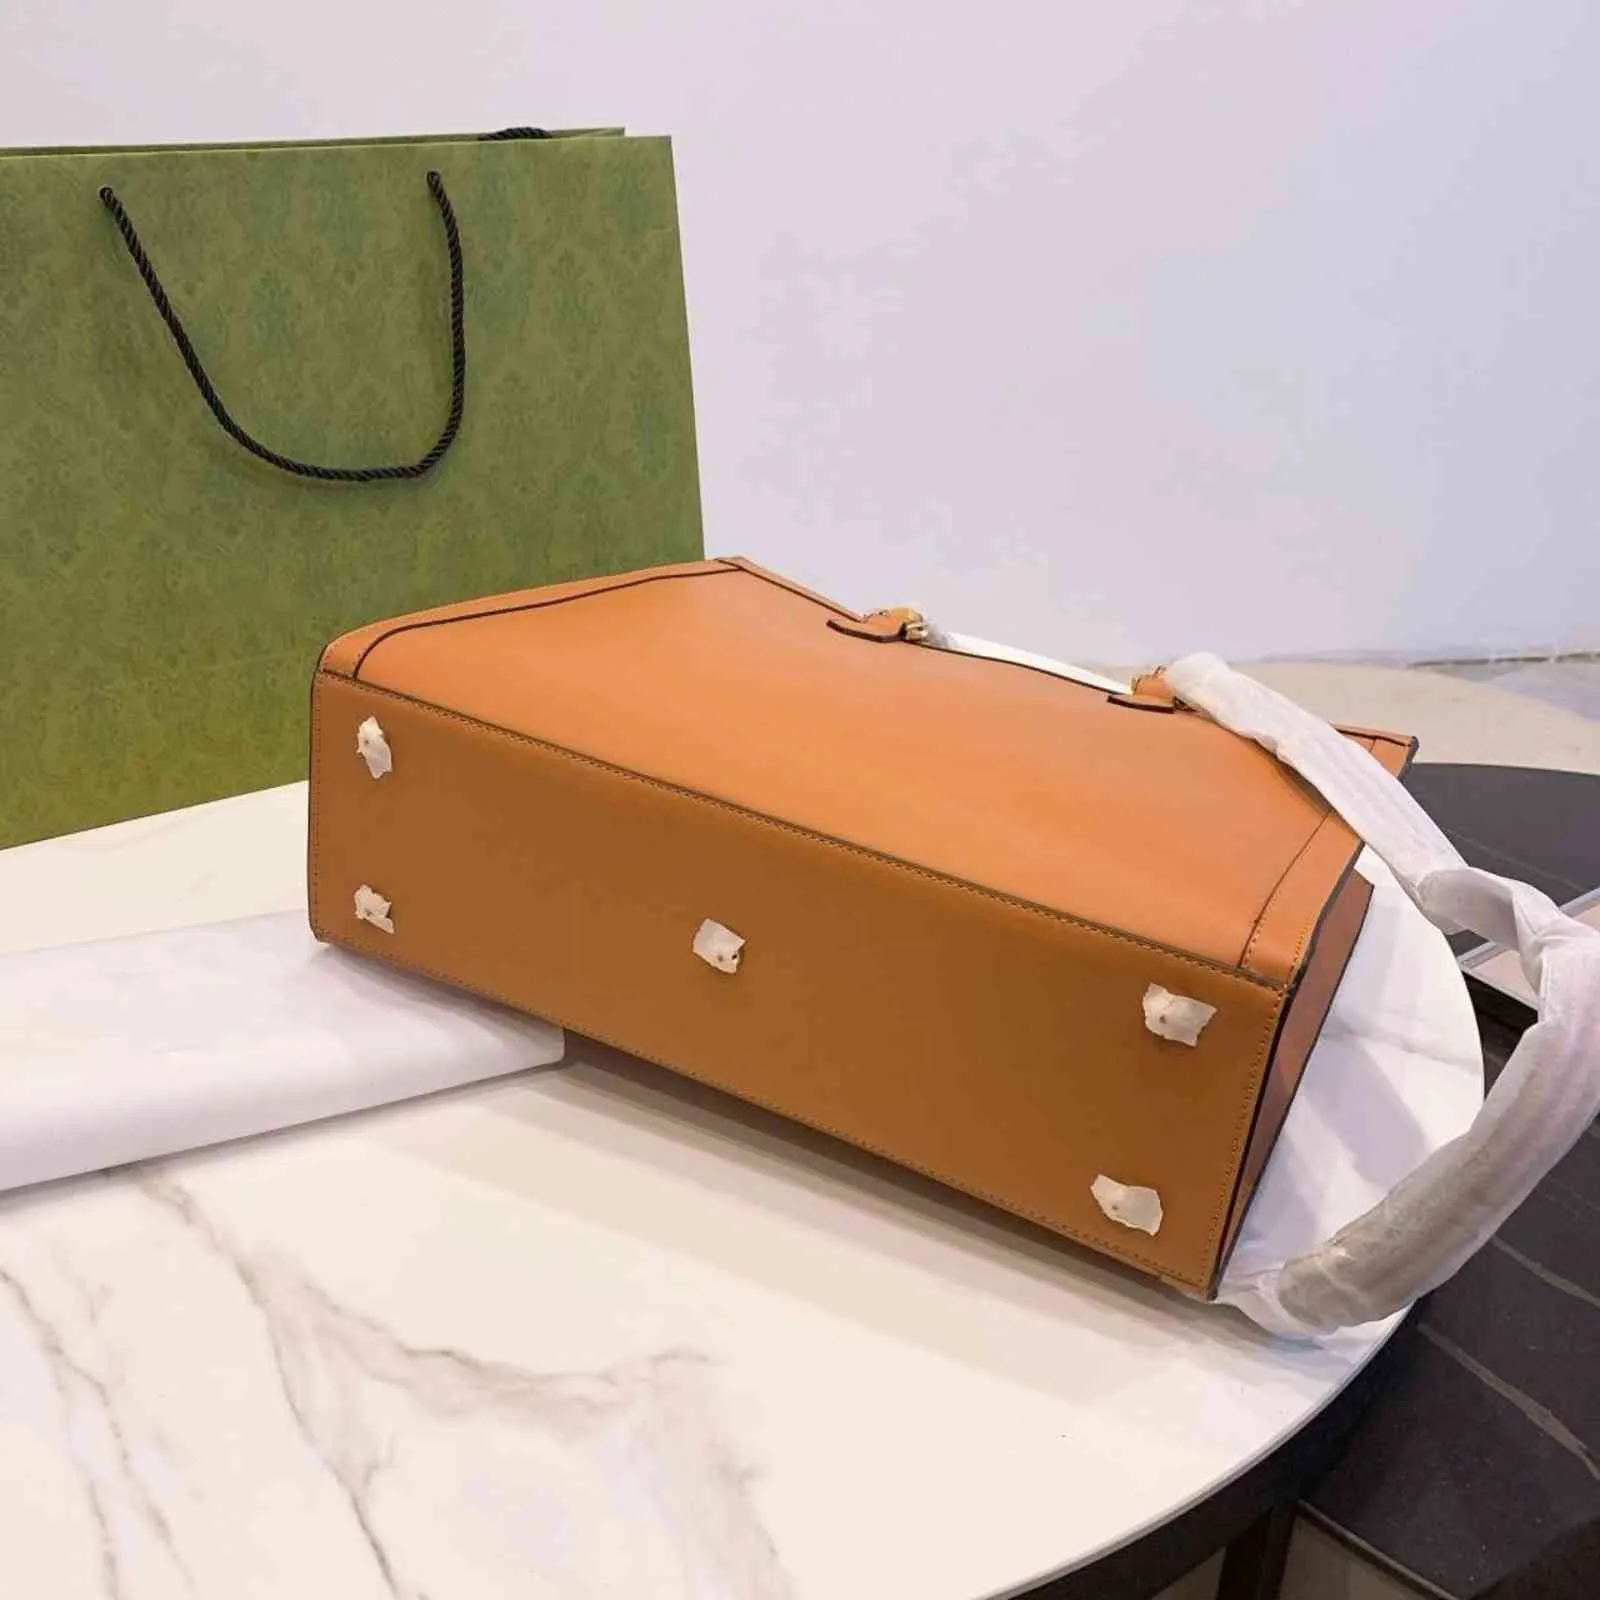 Exquisite square Tote hand-held exquisite design muyuan slubby bag classic design solid color men`s and women`s handbag special handle